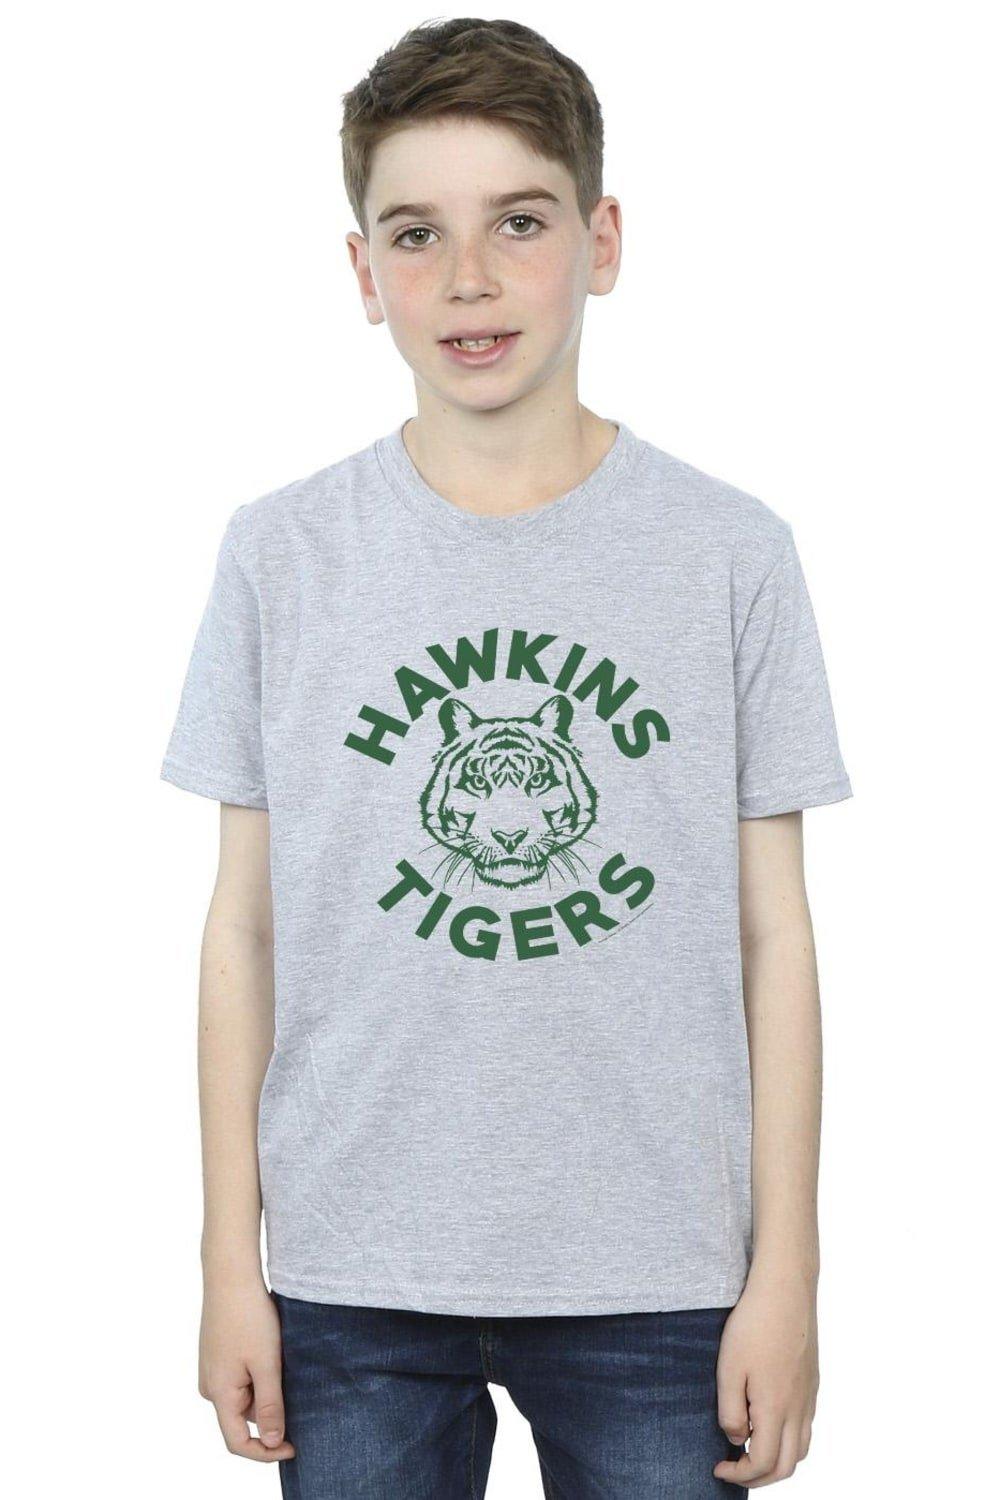 Stranger Things Hawkins Tigers T-Shirt